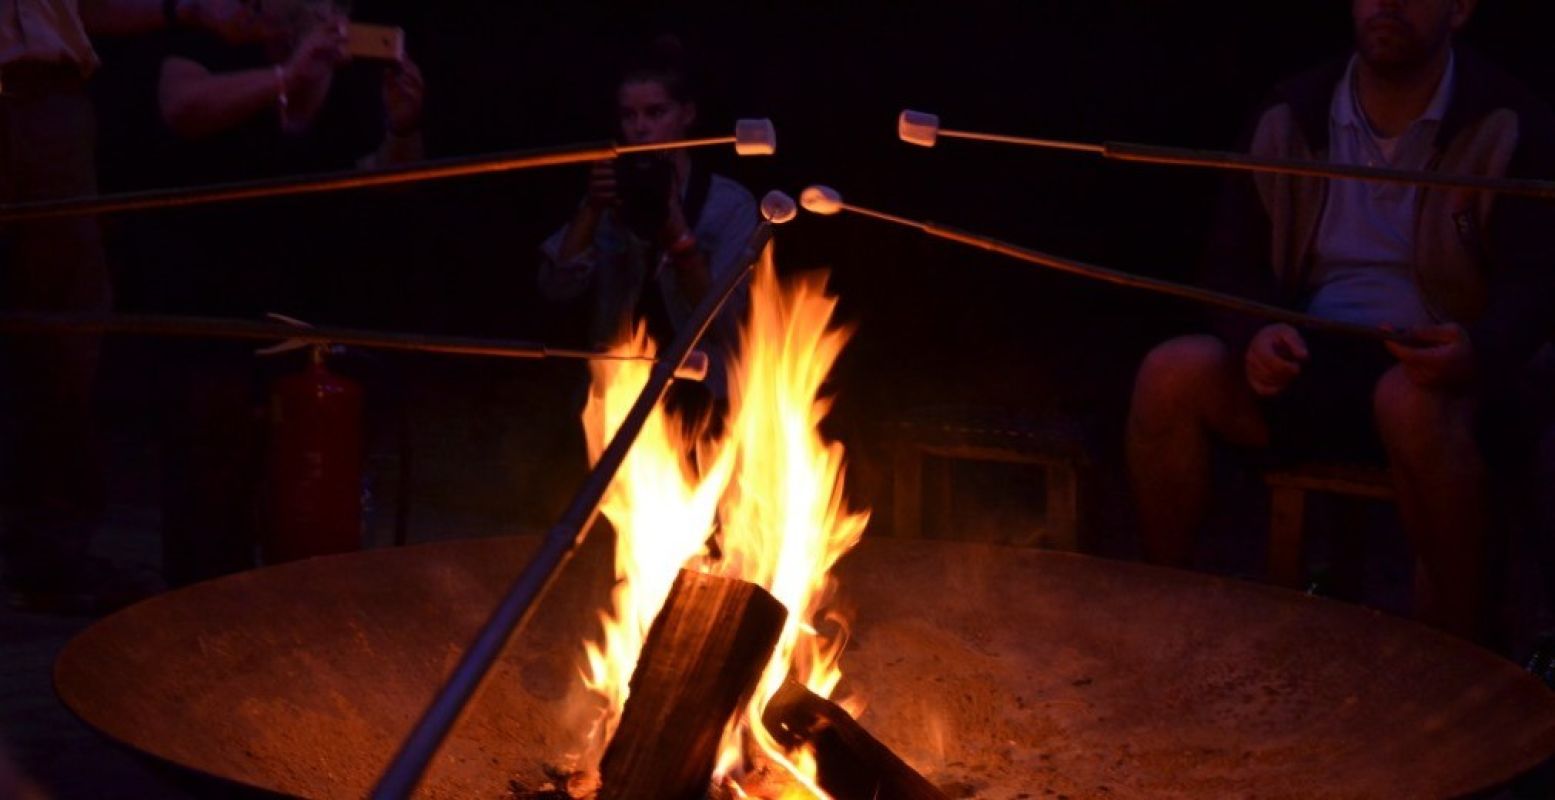 Smelt marshmallows boven een gezellig vuurtje. Foto: Safaripark Beekse Bergen